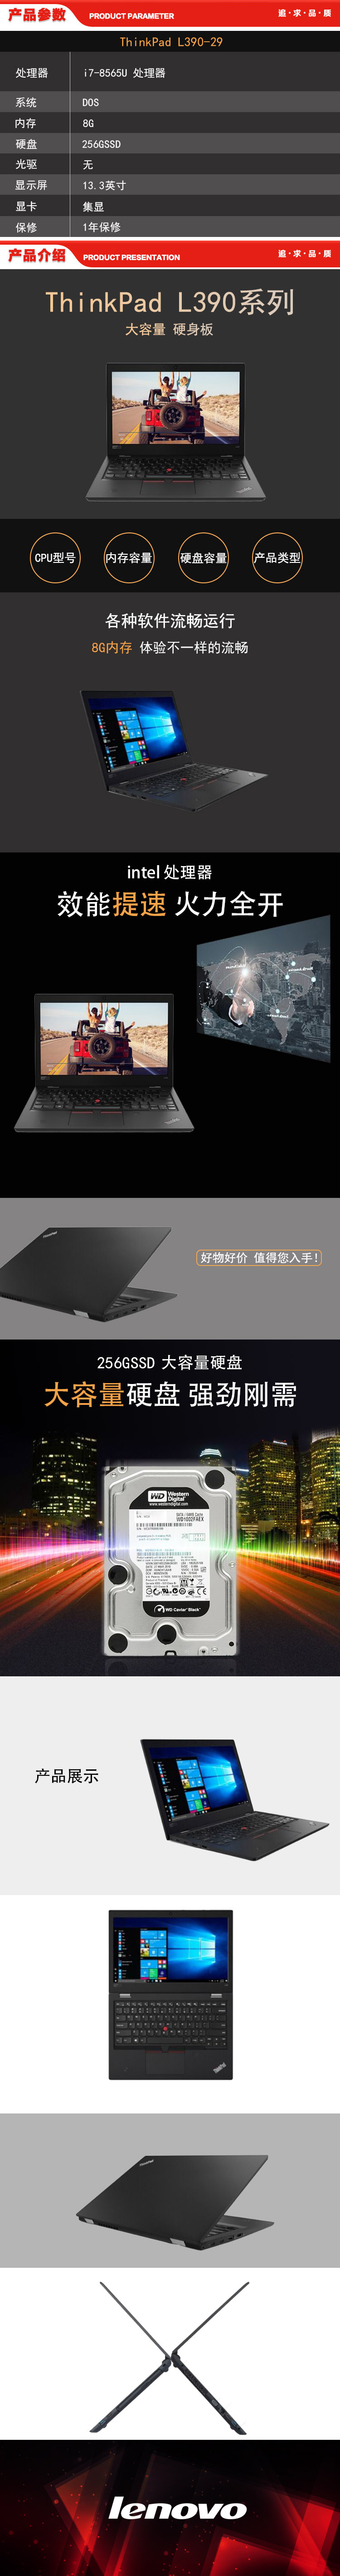 联想 Lenovo ThinkPad L380-33 笔记本.jpg